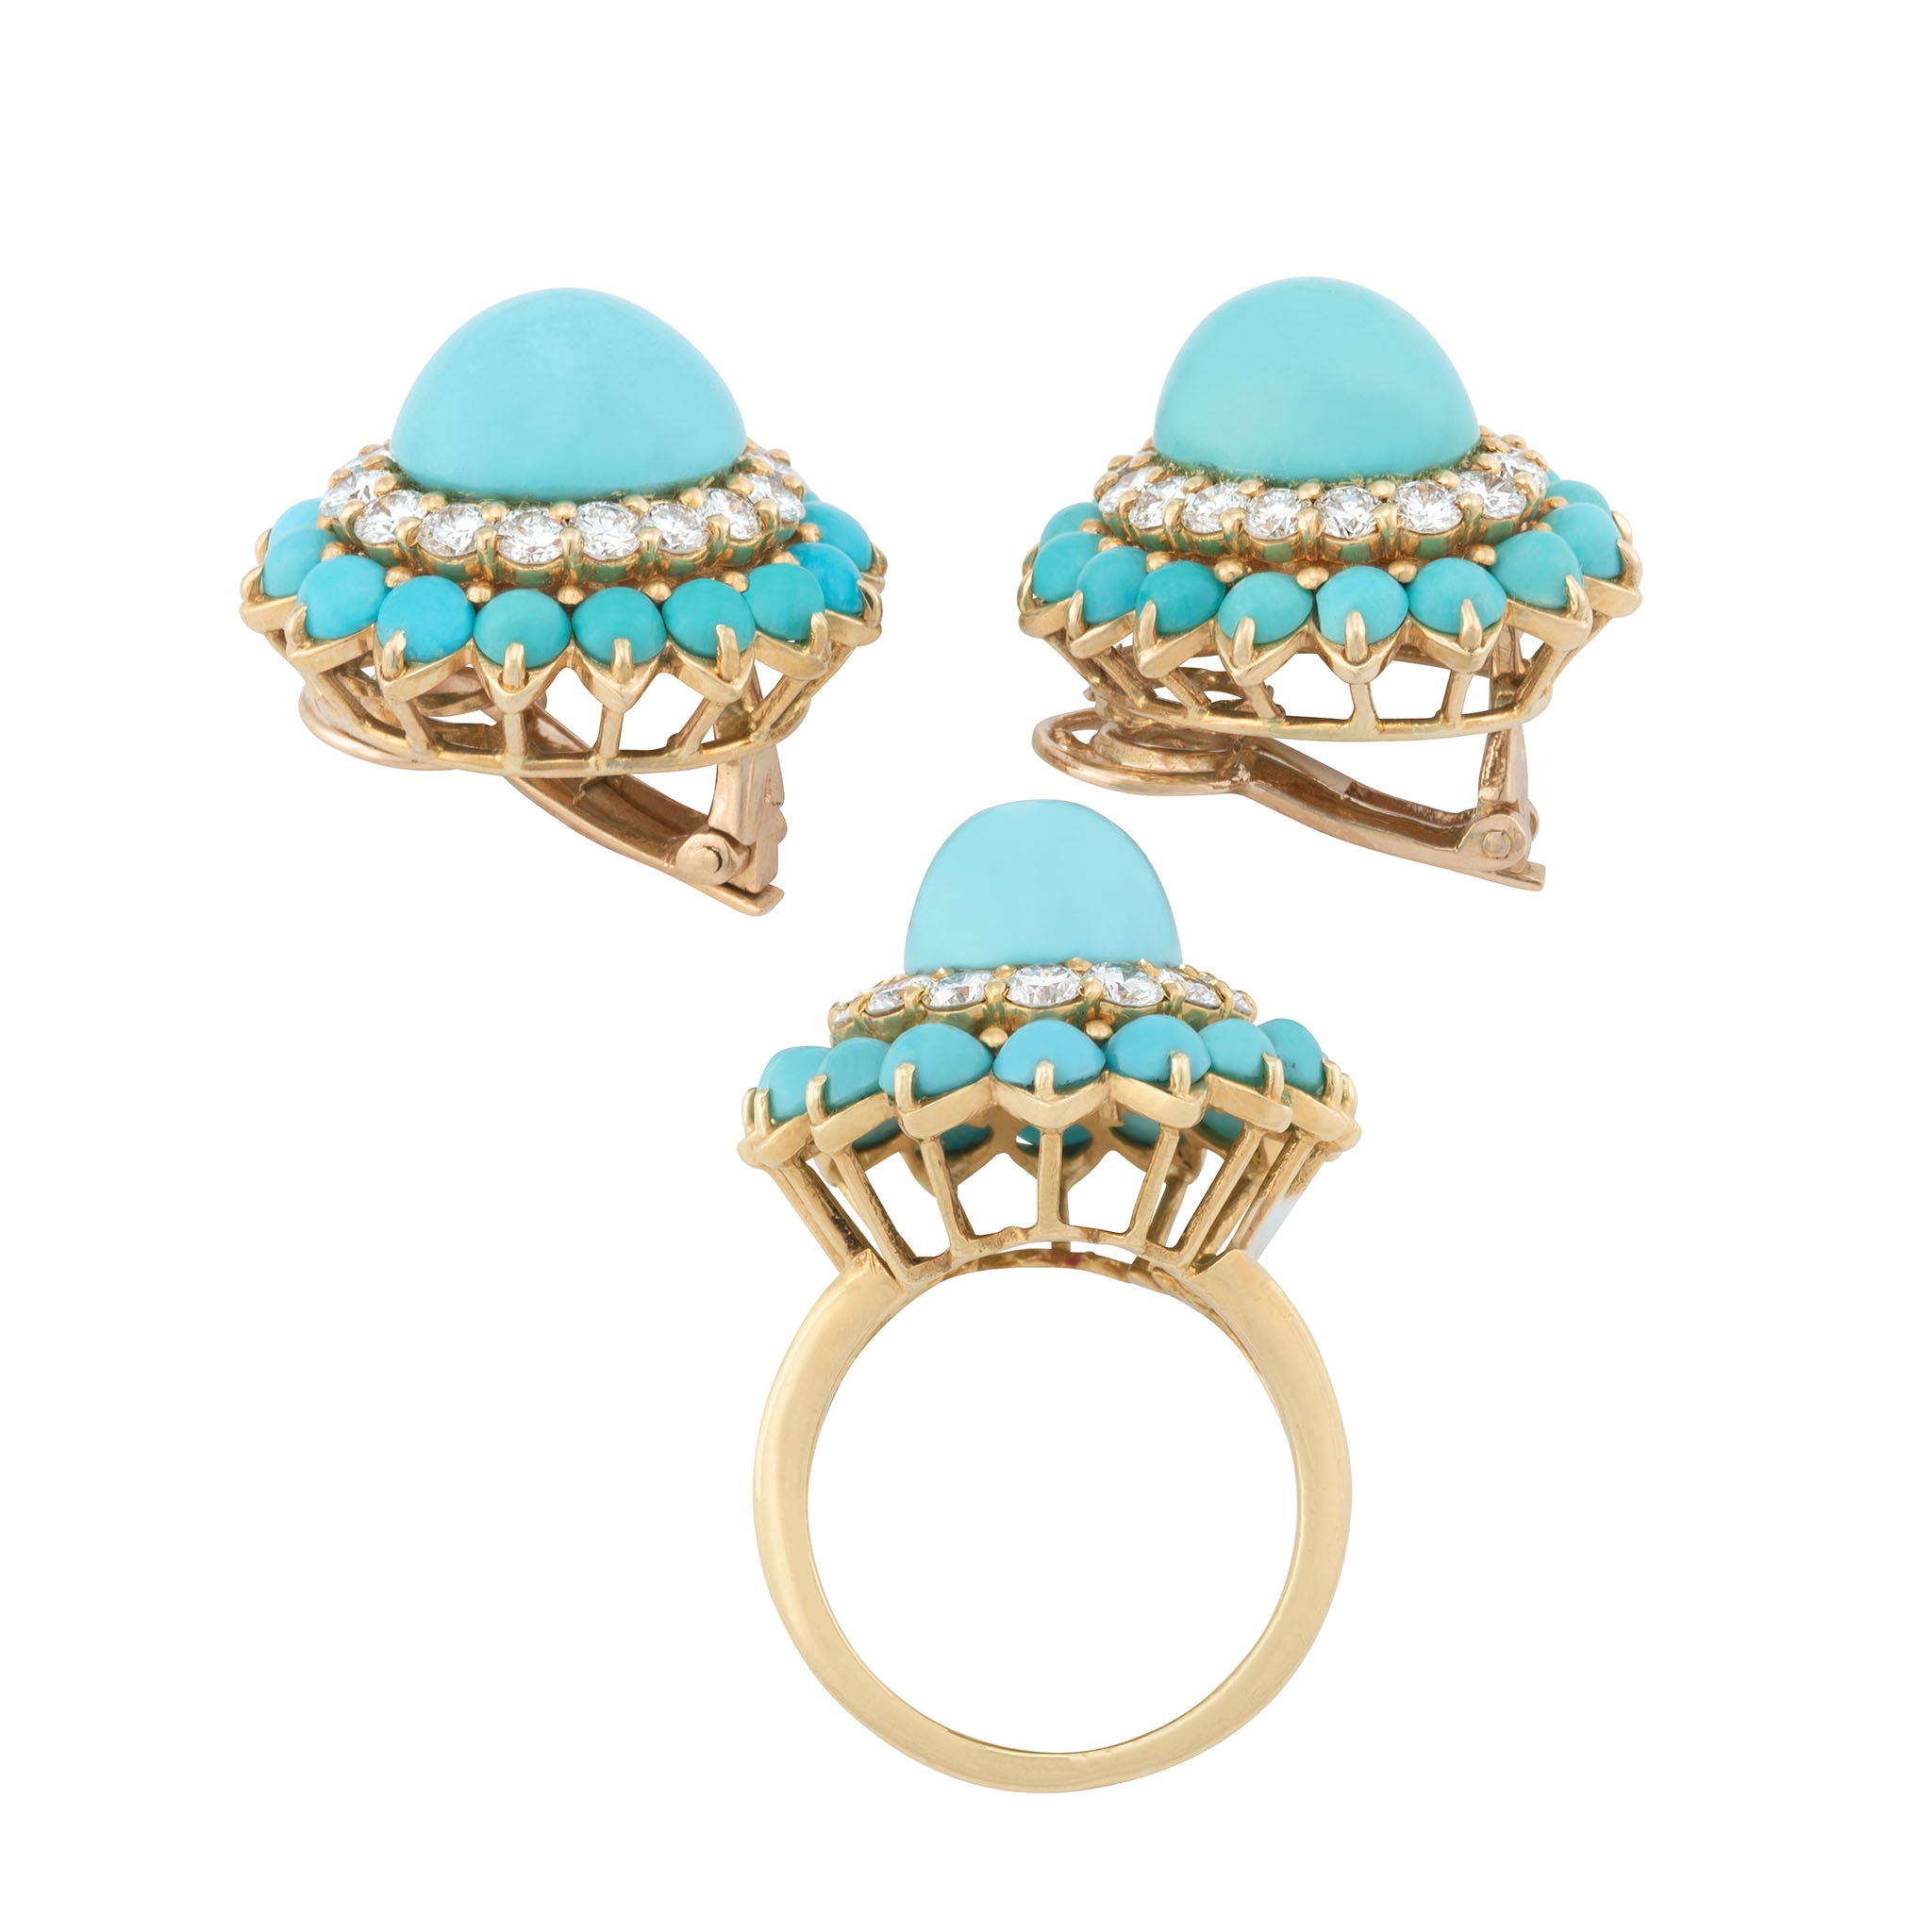 Vintage Boucheron Turquoise and Diamond Ring | cameocalamity.com